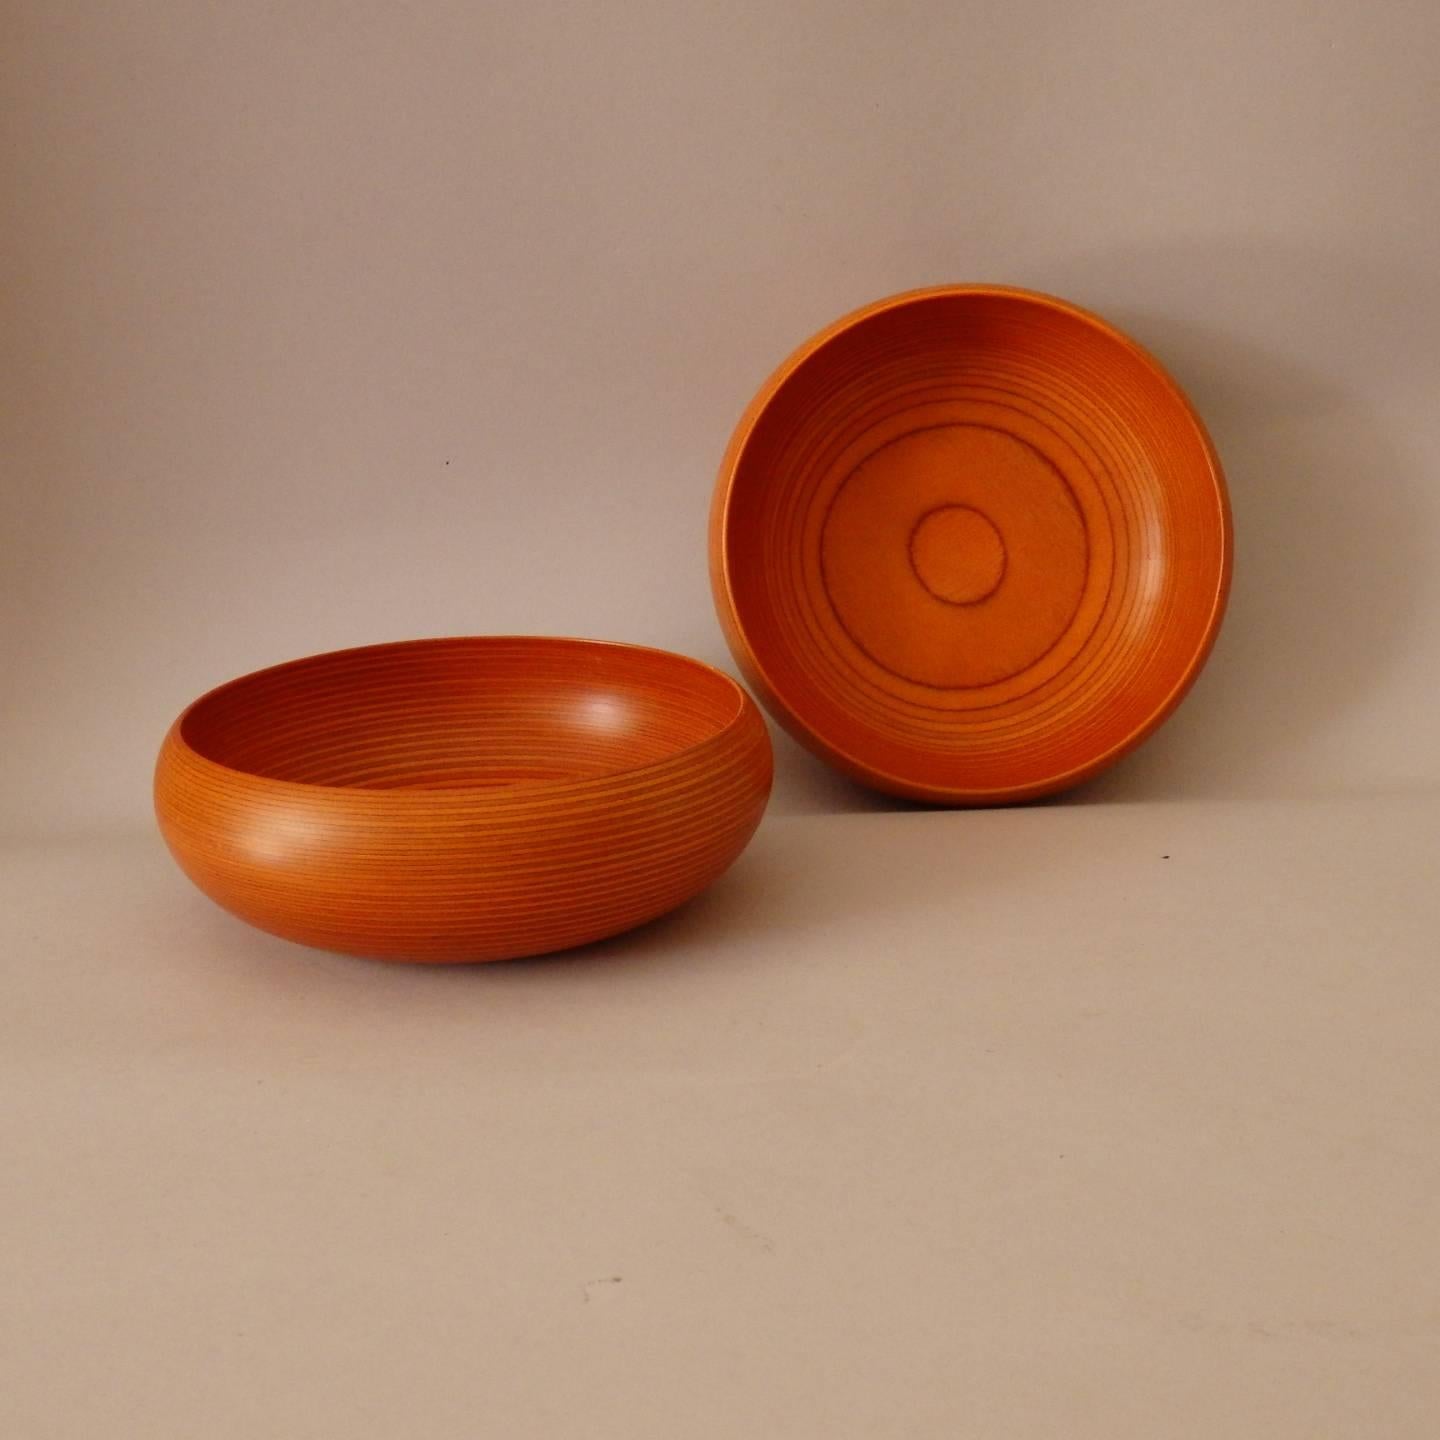 Pair of Finnish bowls. Lathe turned stacked laminate wood.